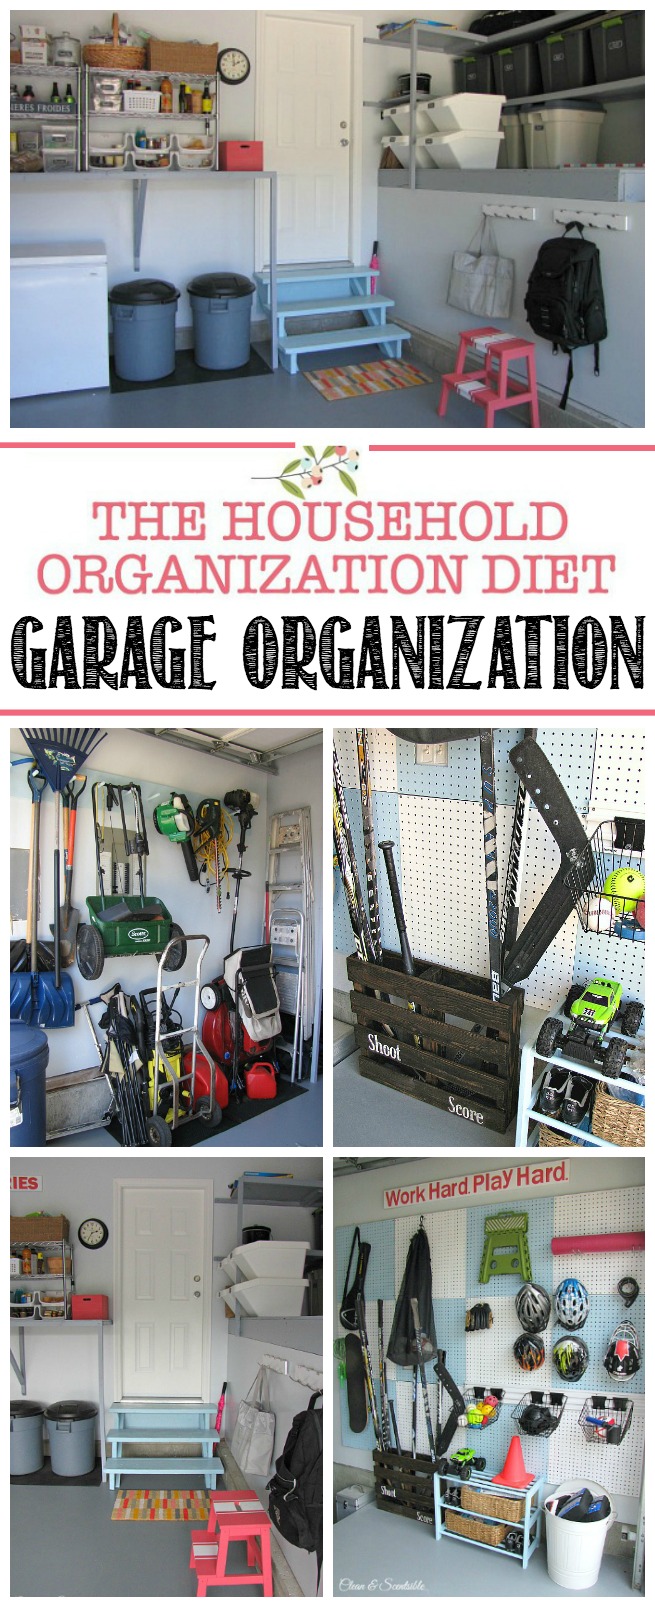 https://www.cleanandscentsible.com/wp-content/uploads/2017/07/Garage-Organization-The-July-Household-Organization-Diet.jpg